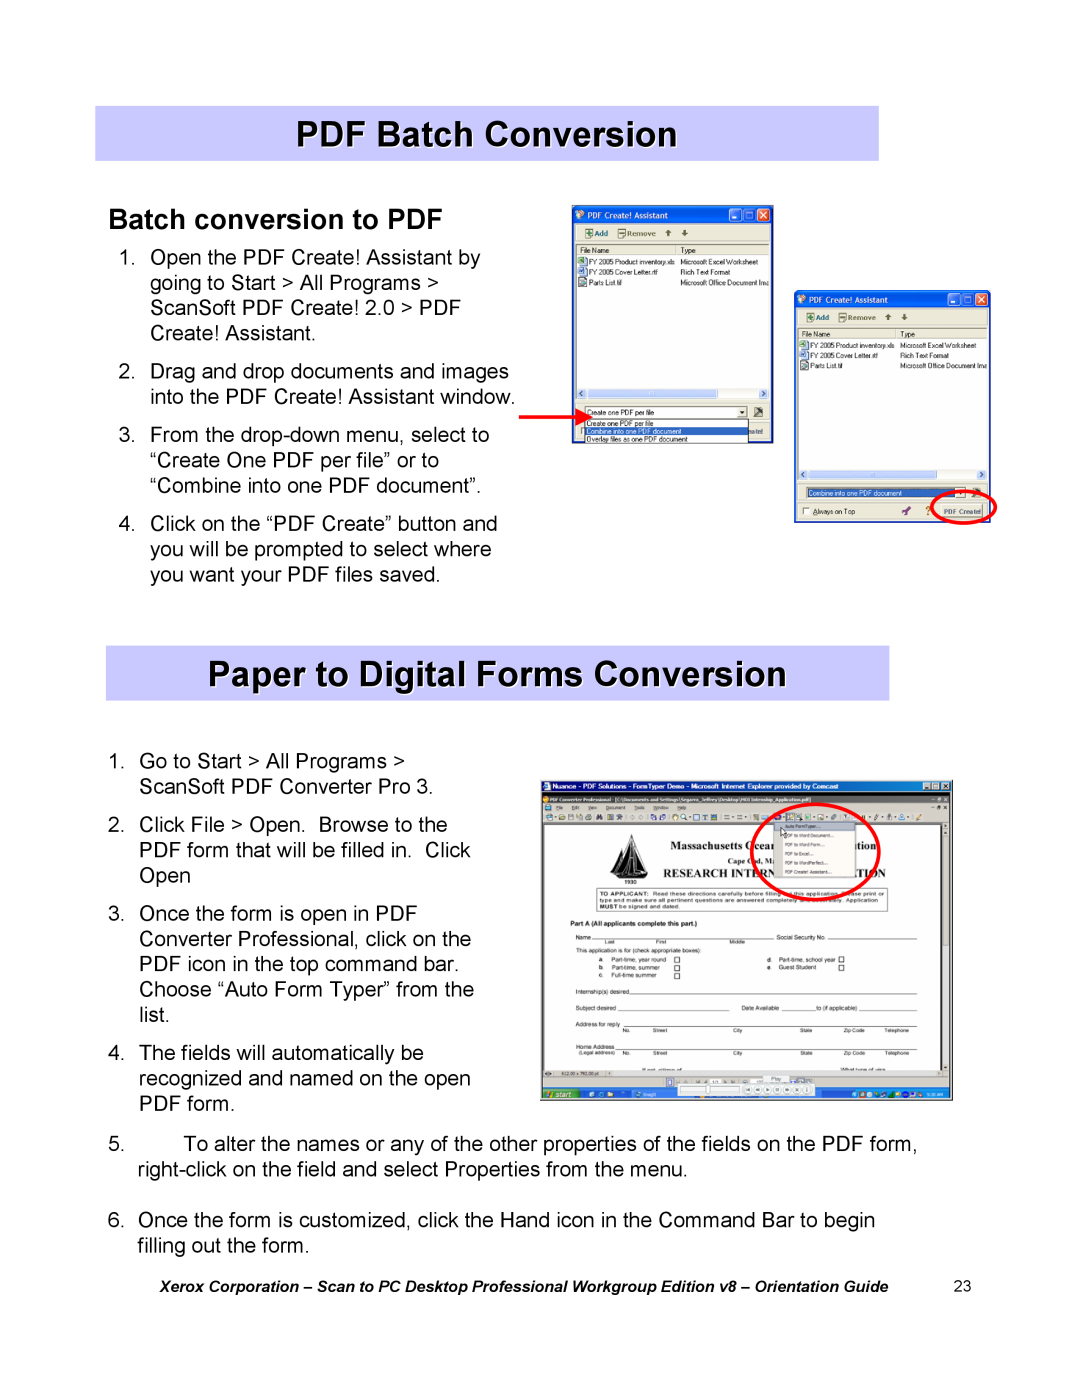 Xerox G8144Z manual PDF Batch Conversion, Paper to Digital Forms Conversion 